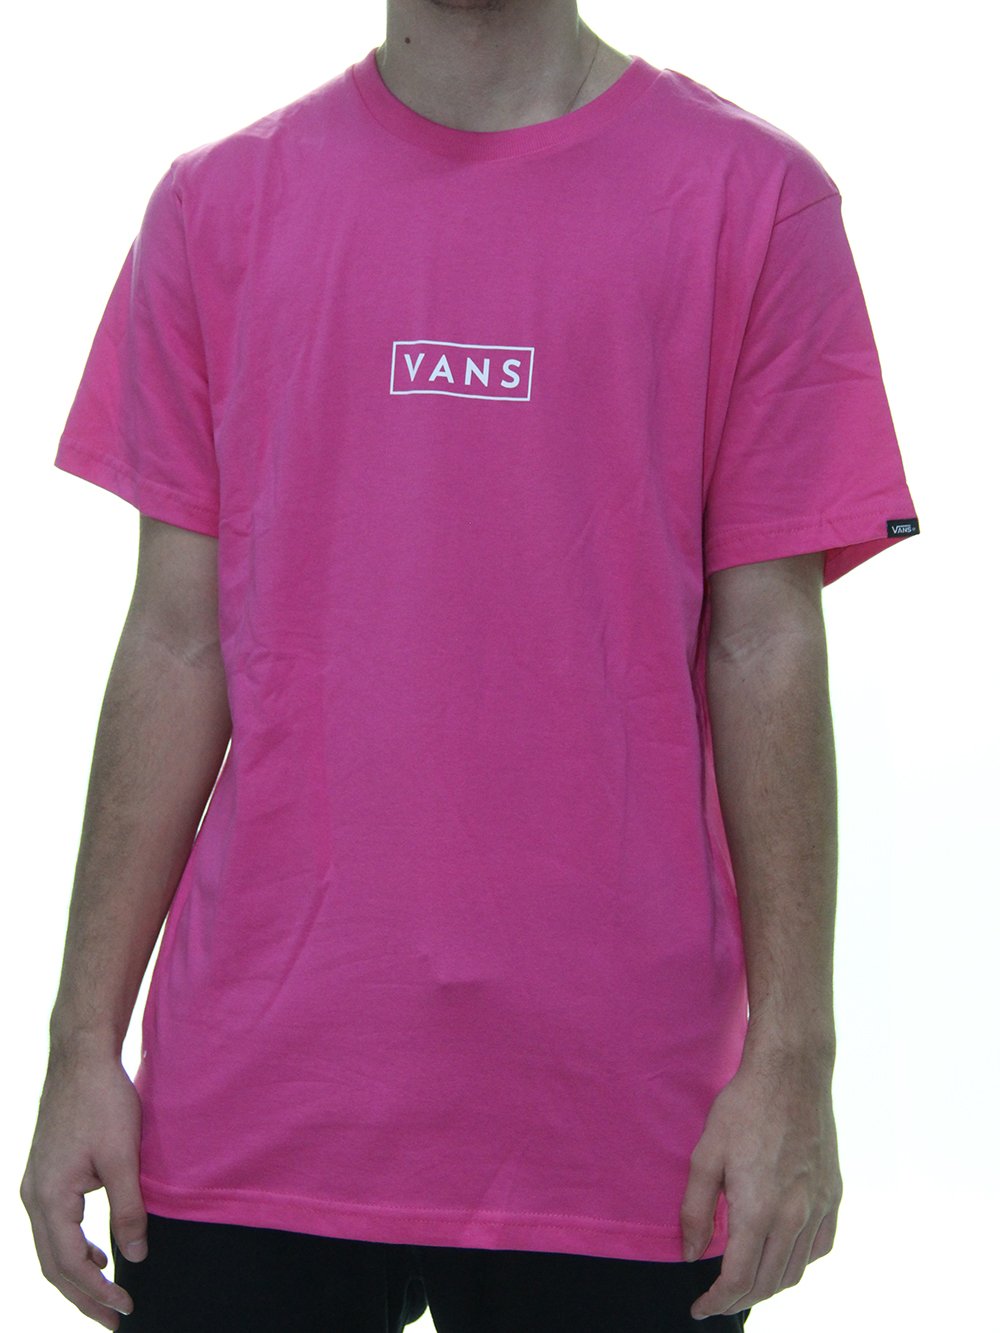 camiseta vans rosa masculina